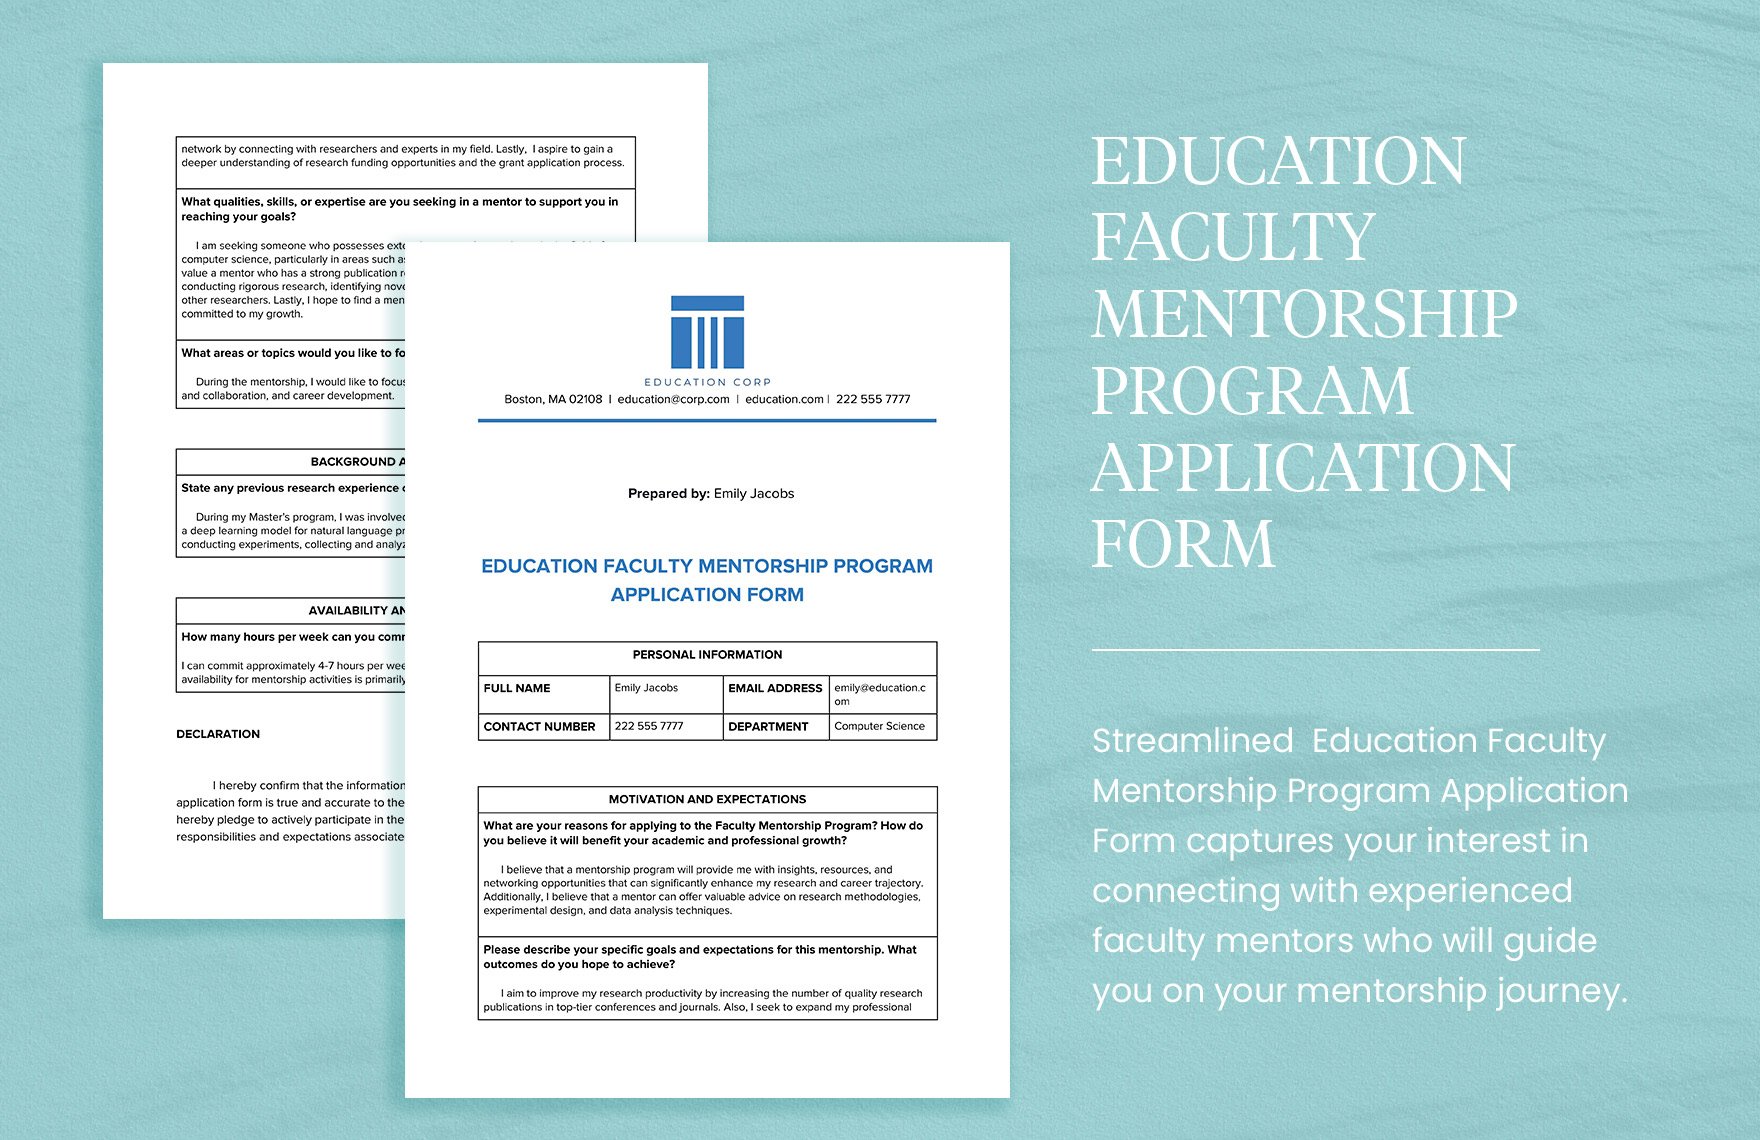 Education Faculty Mentorship Program Application Form